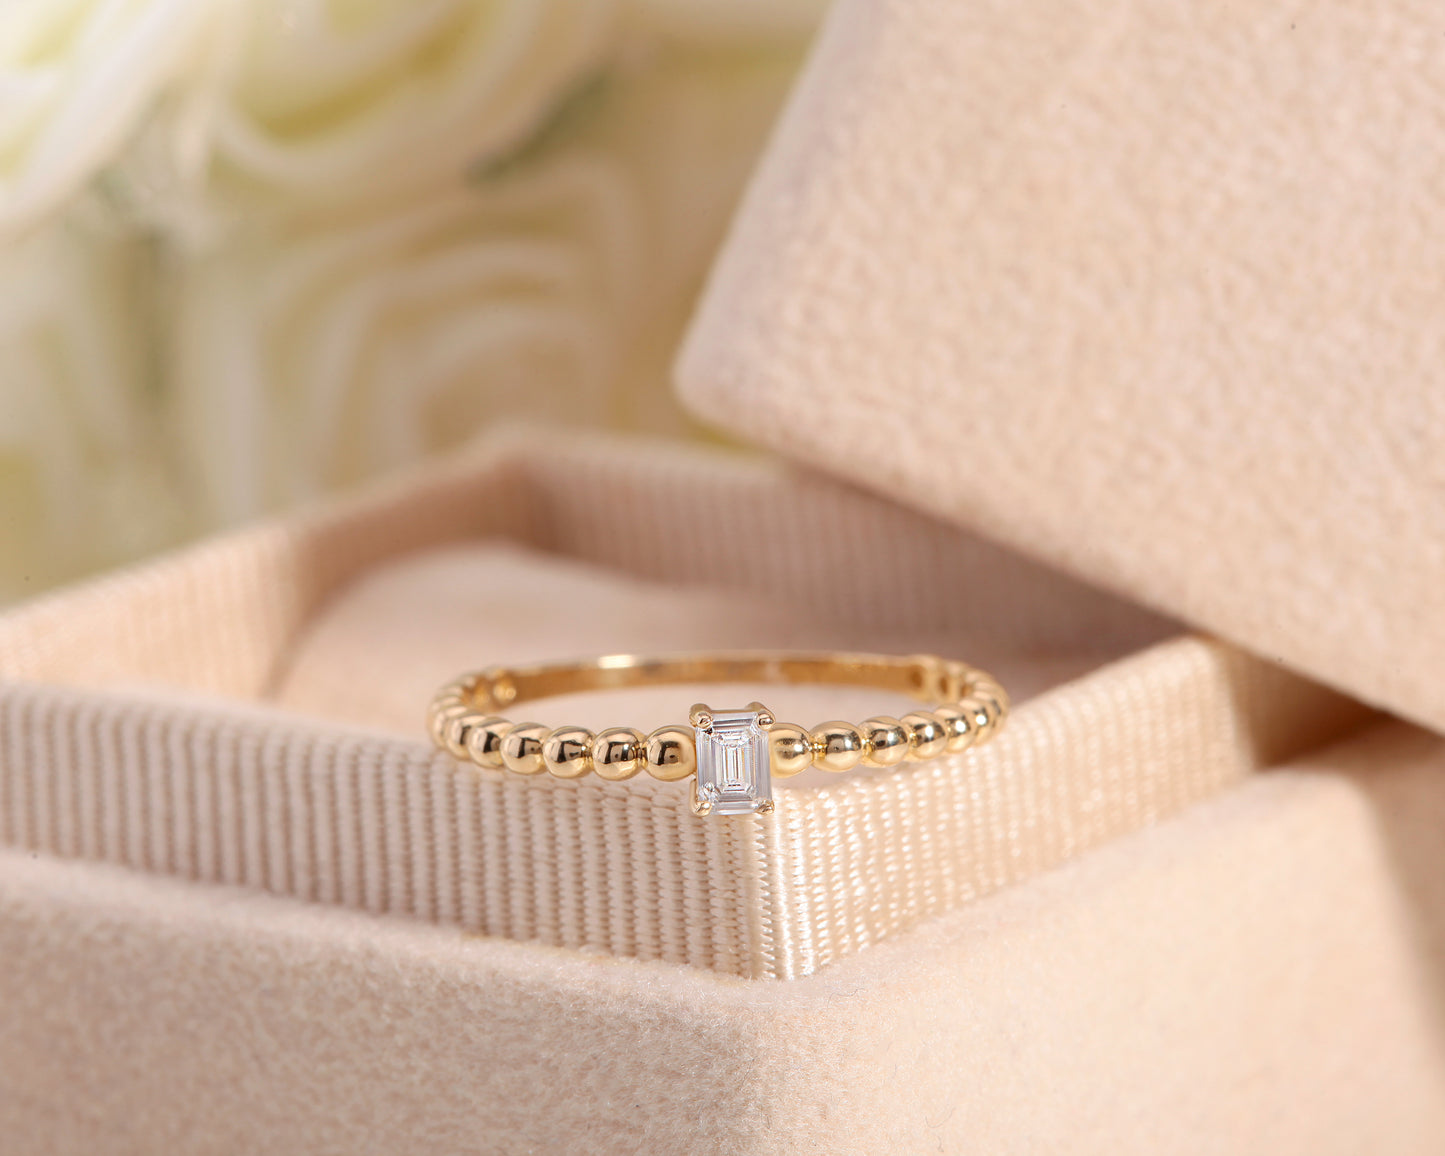 Solitaire Baguette Cut Diamond Ring with Unique Design 14K Yellow Gold